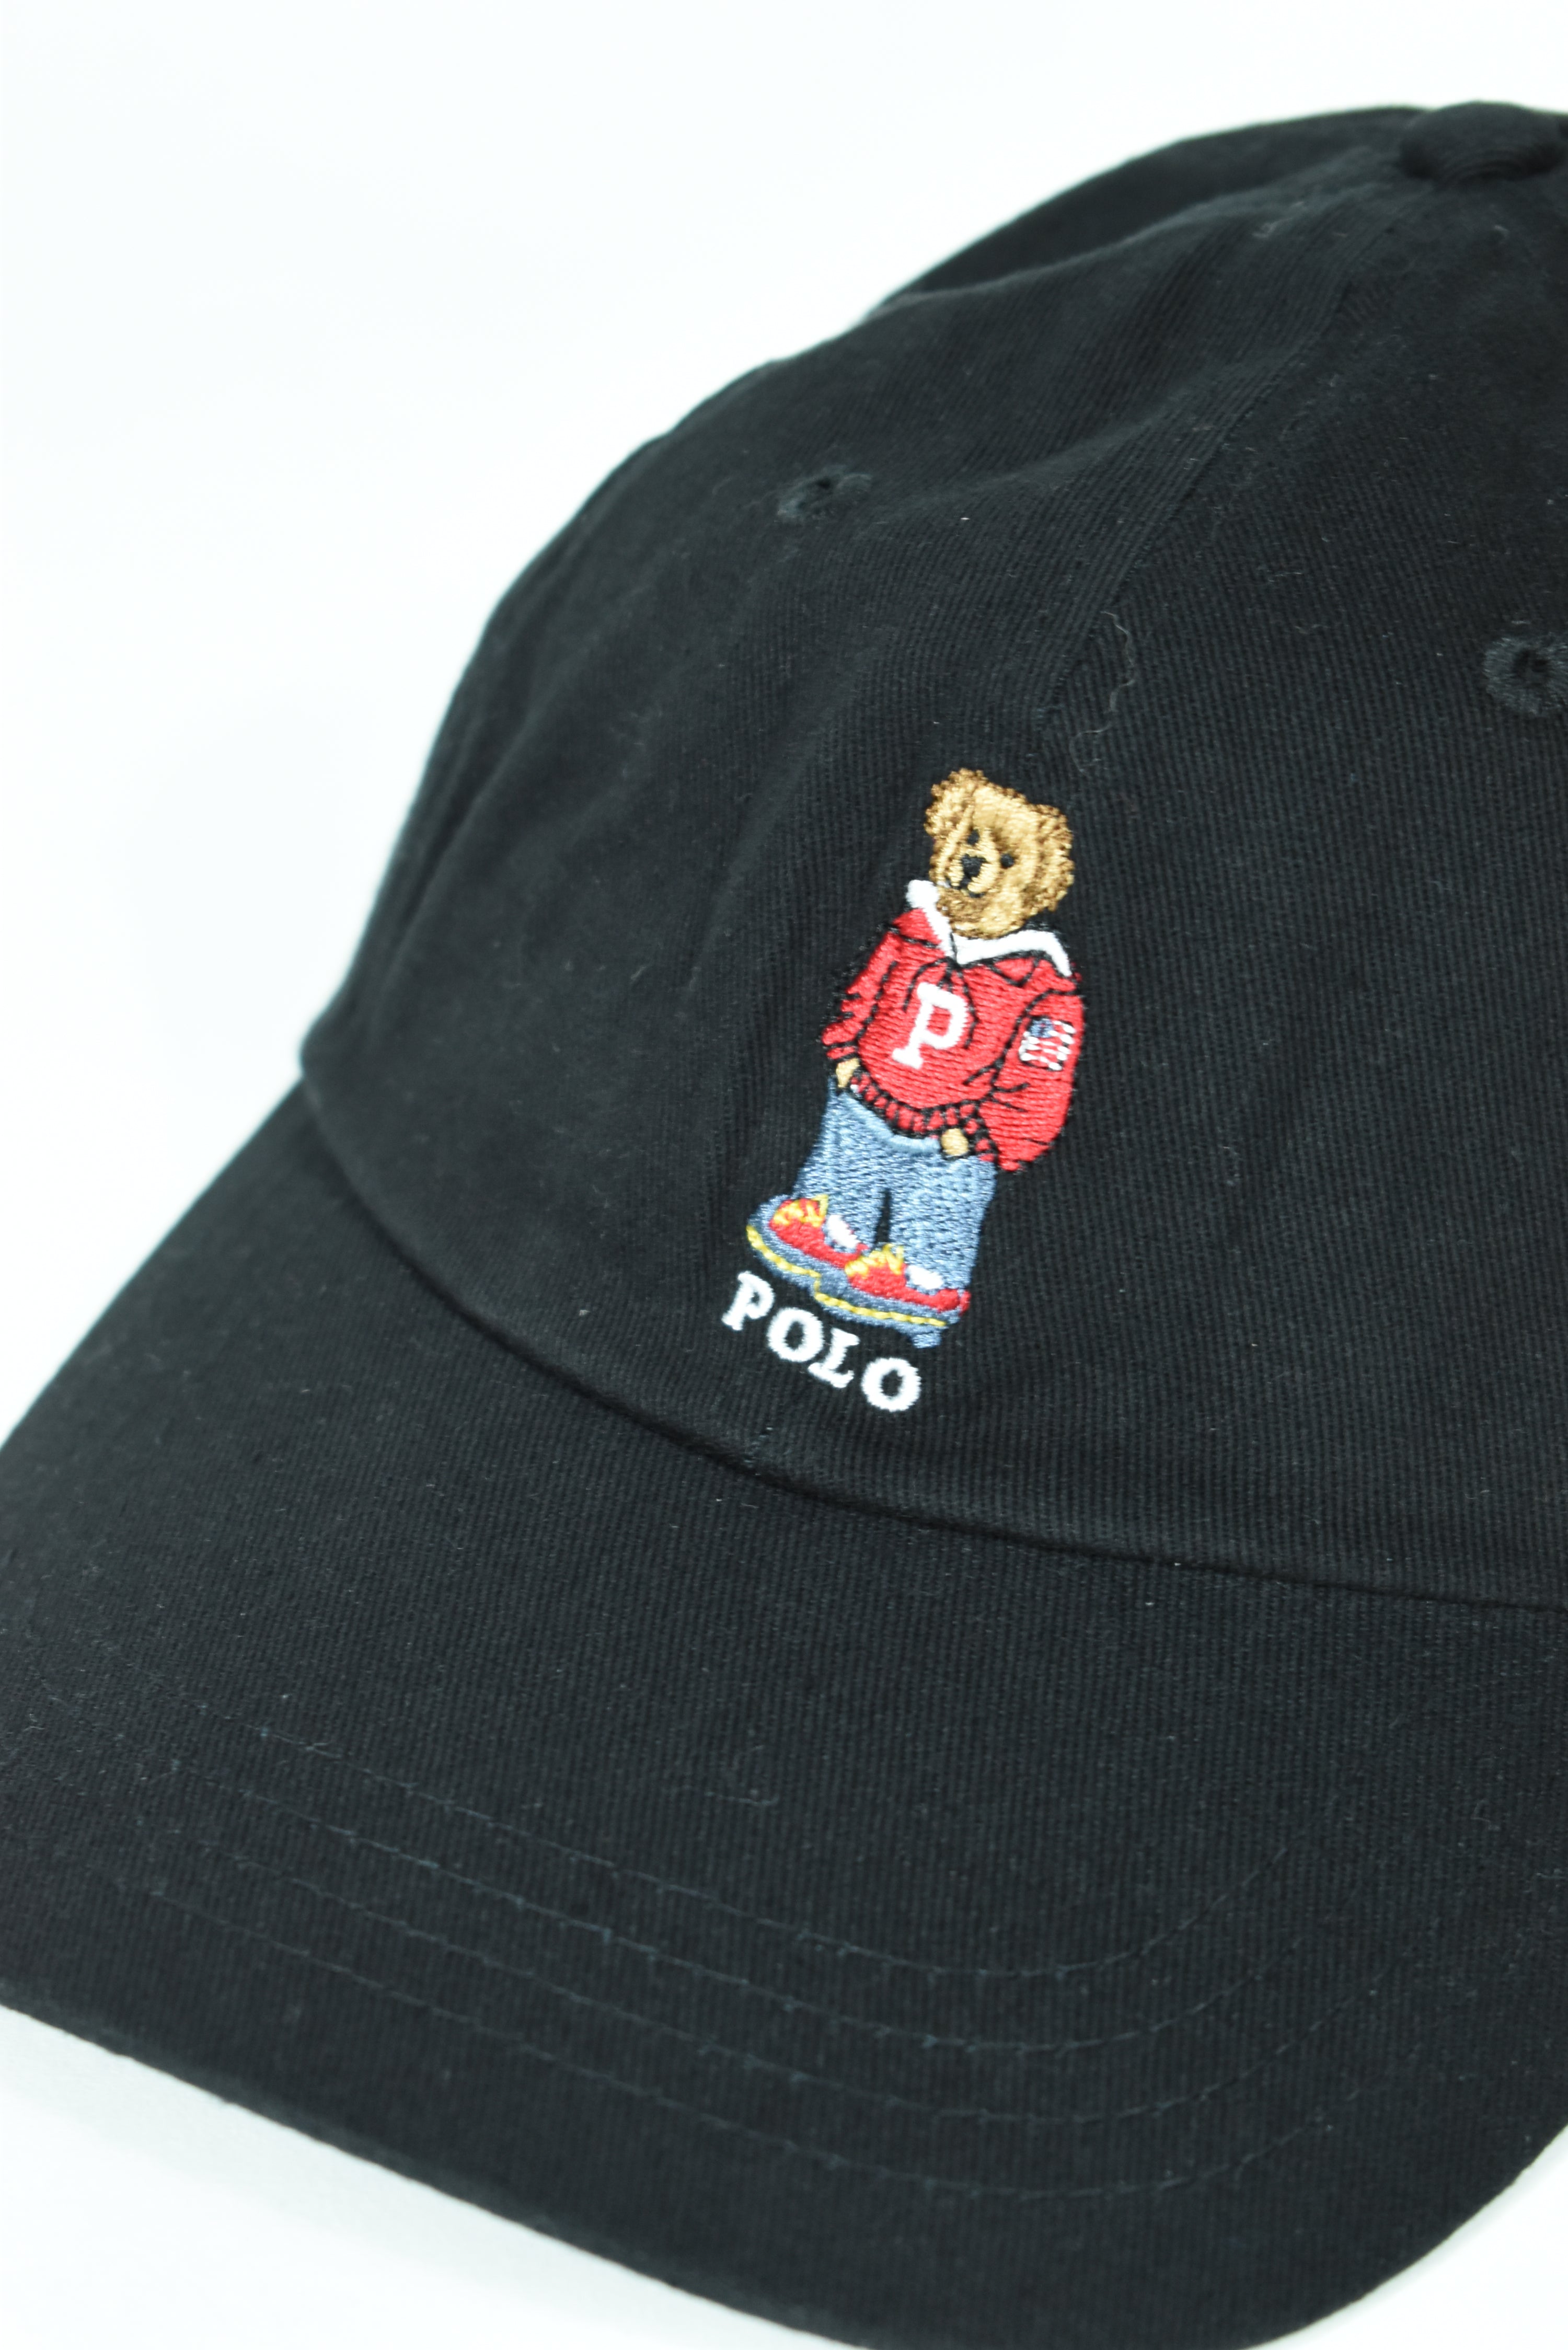 New Black RL Polo Bear Embroidery Cap